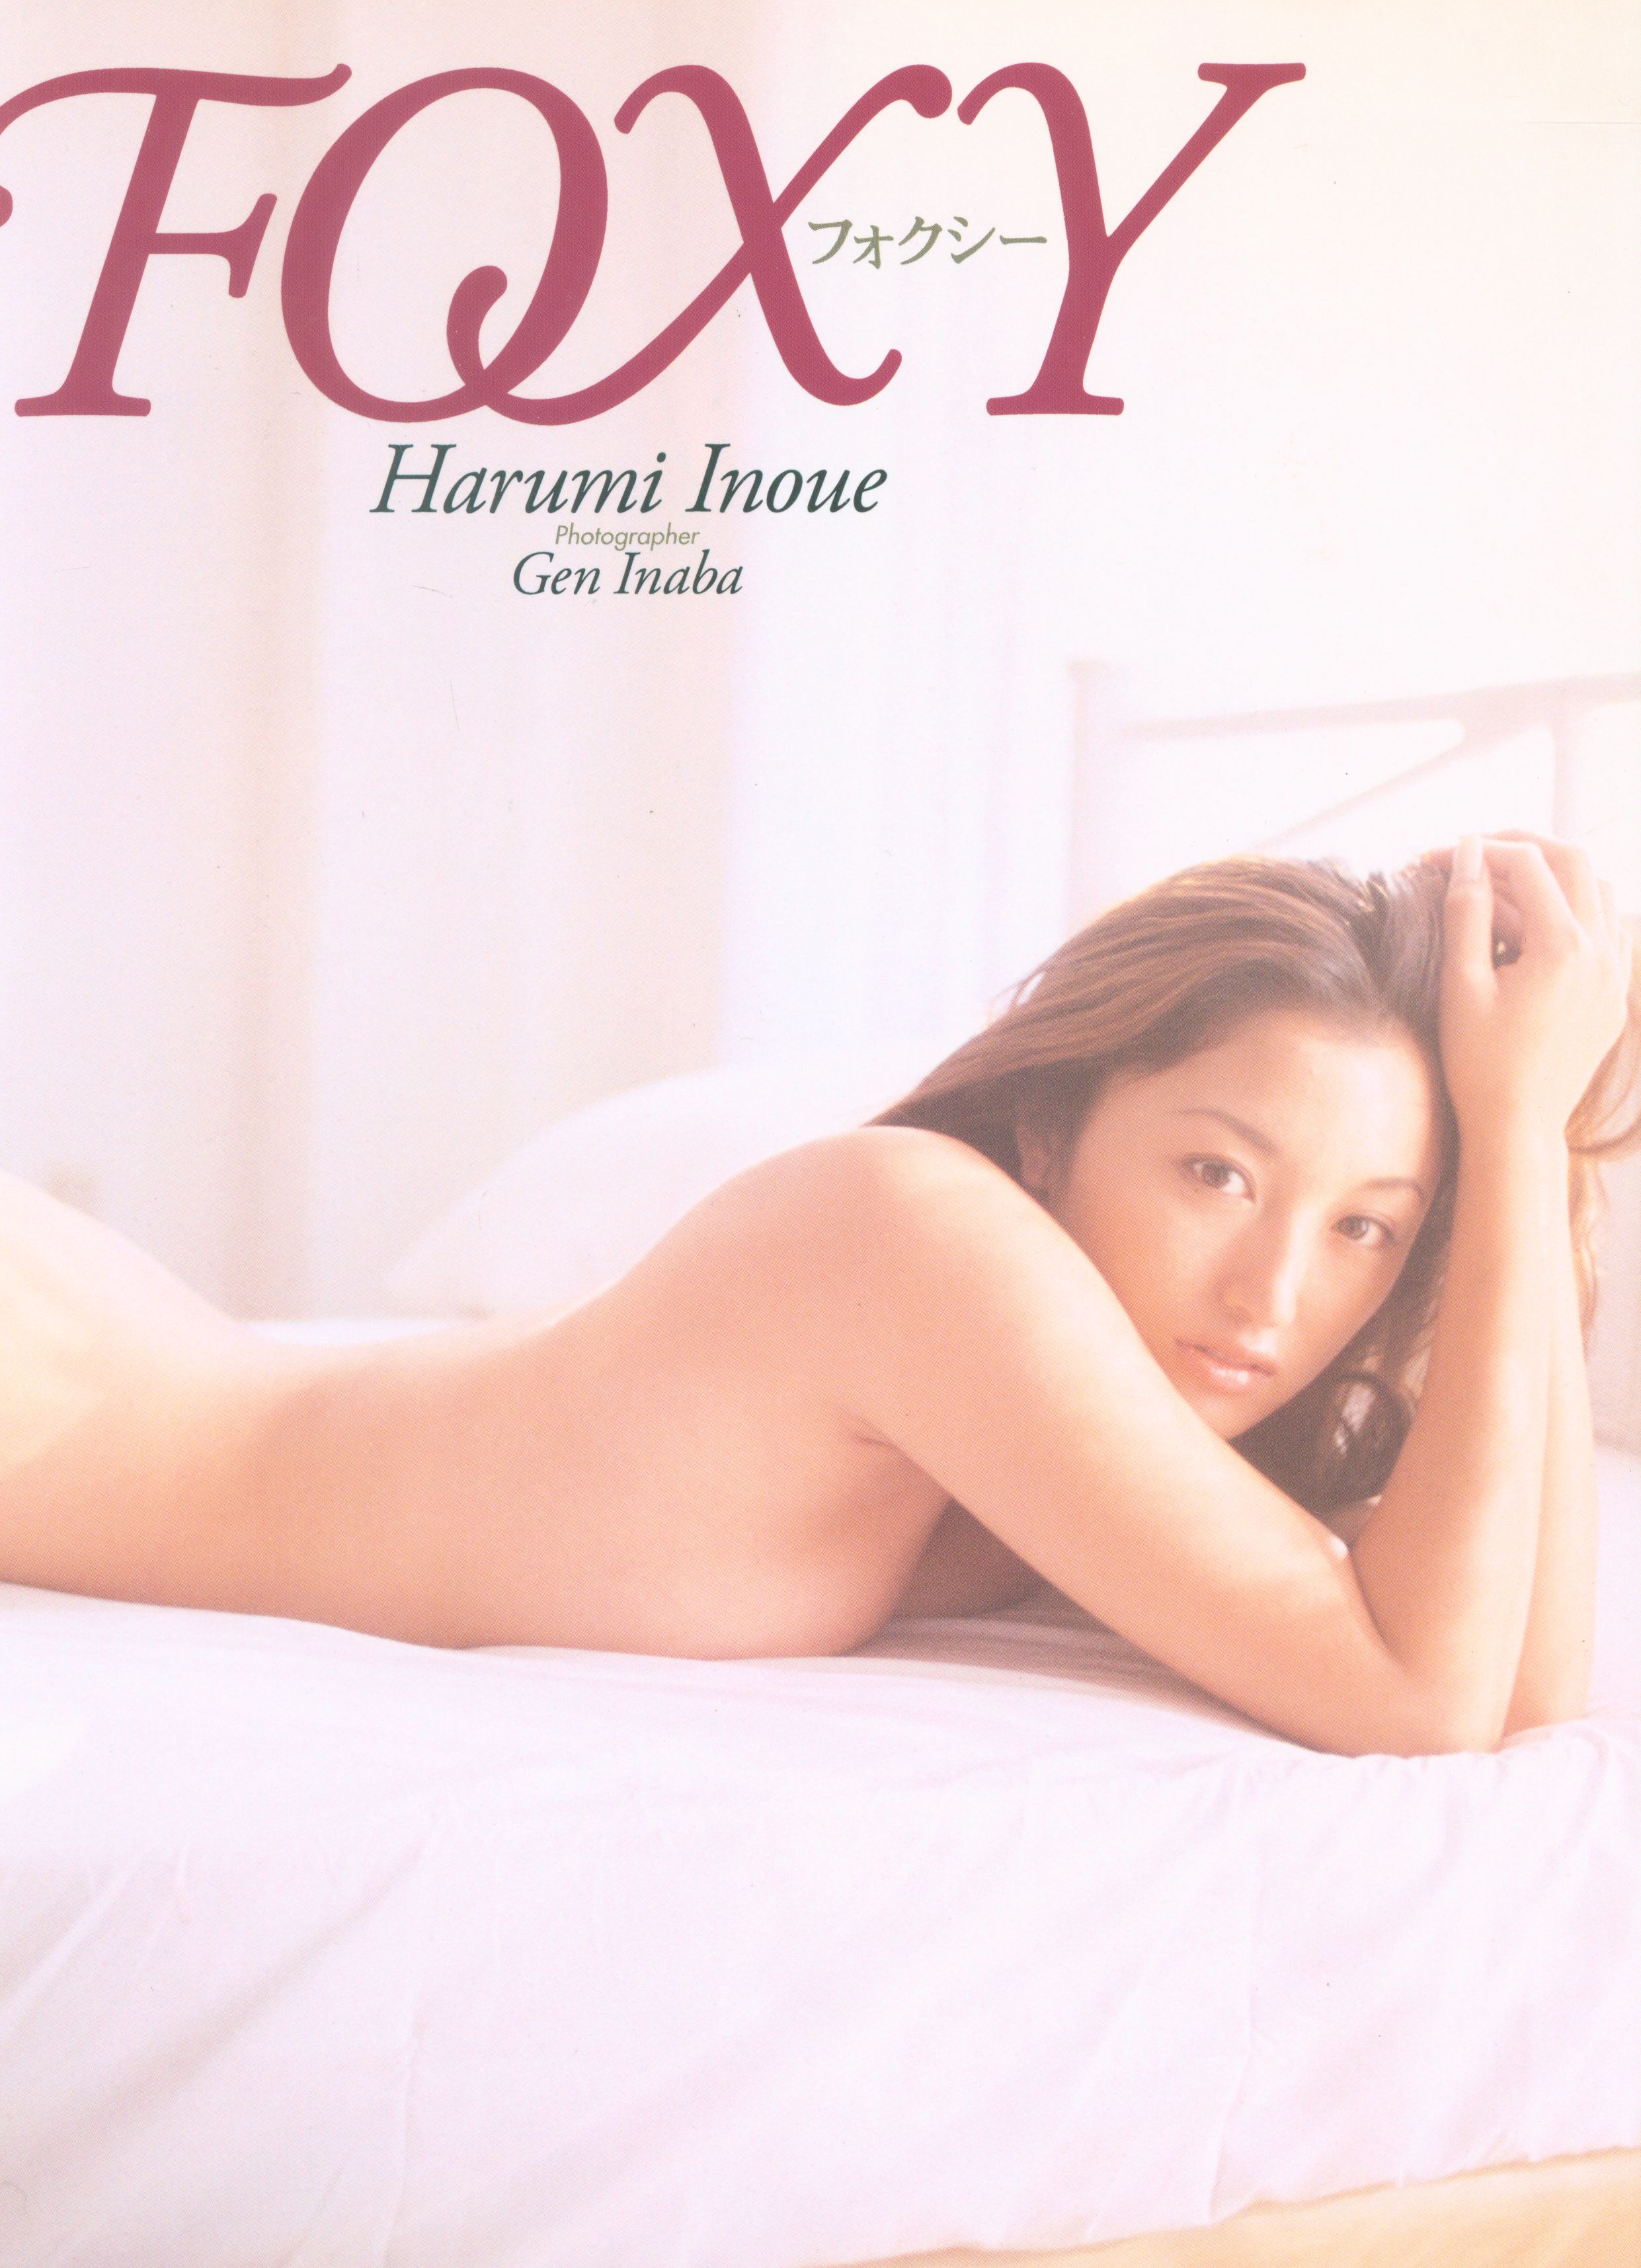 Harumi inoue nude